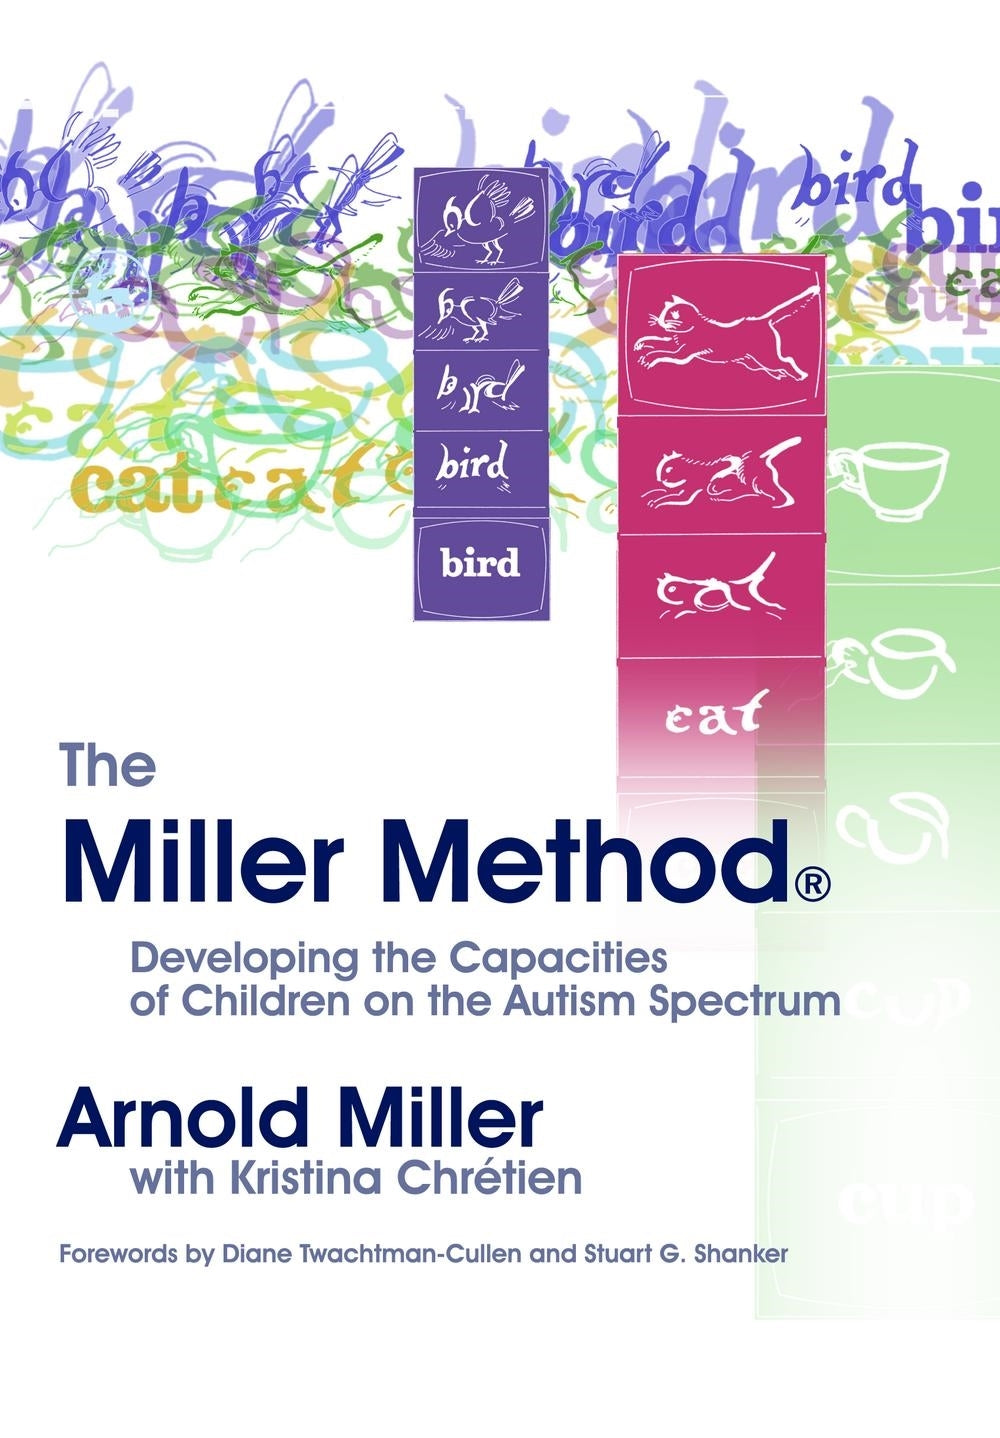 The Miller Method (R) by Arnold Miller